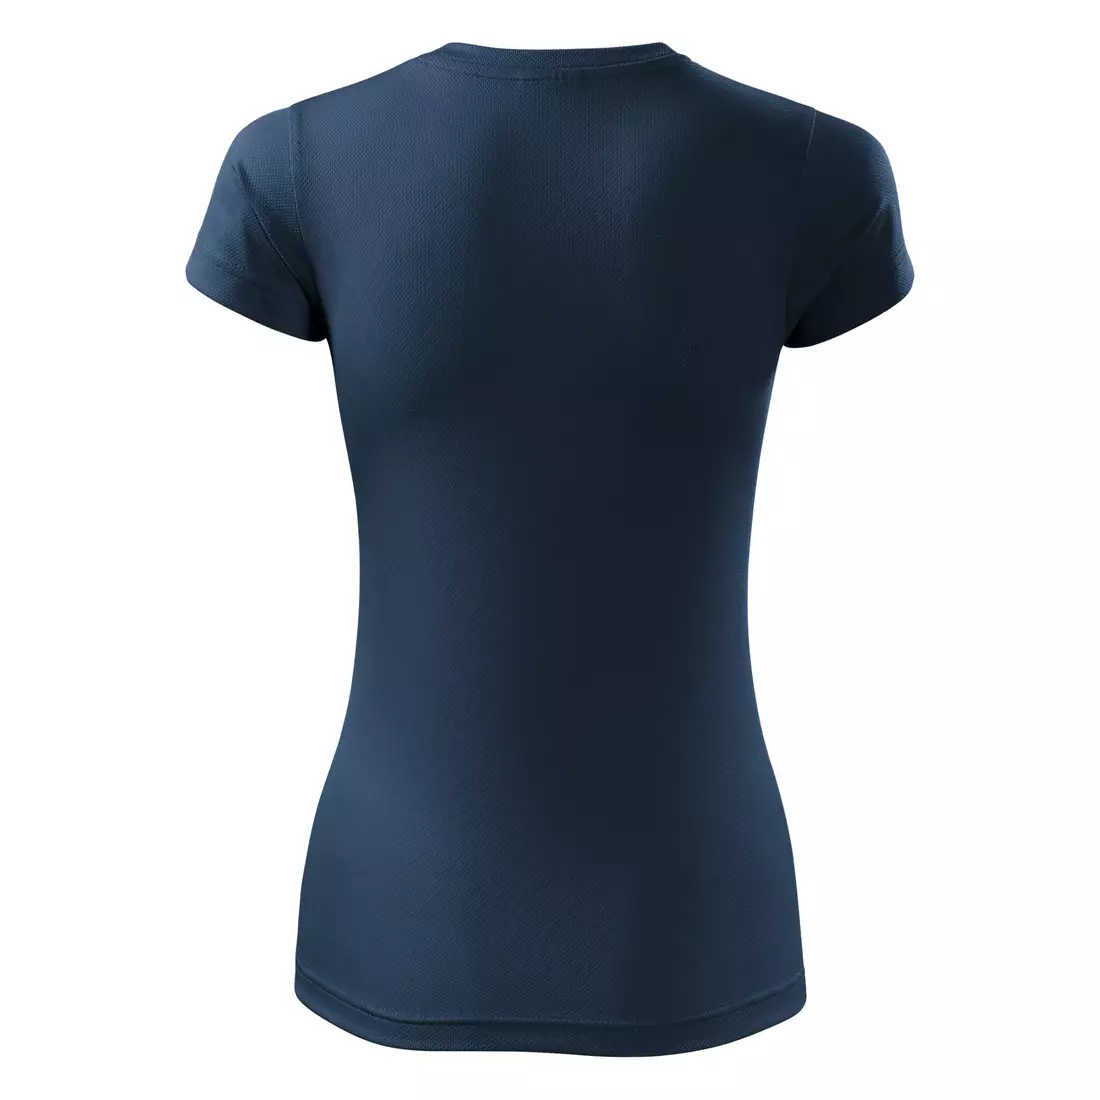 MALFINI FANTASY - Women's Sports T-Shirt 100% Polyester, Navy 1400212-140